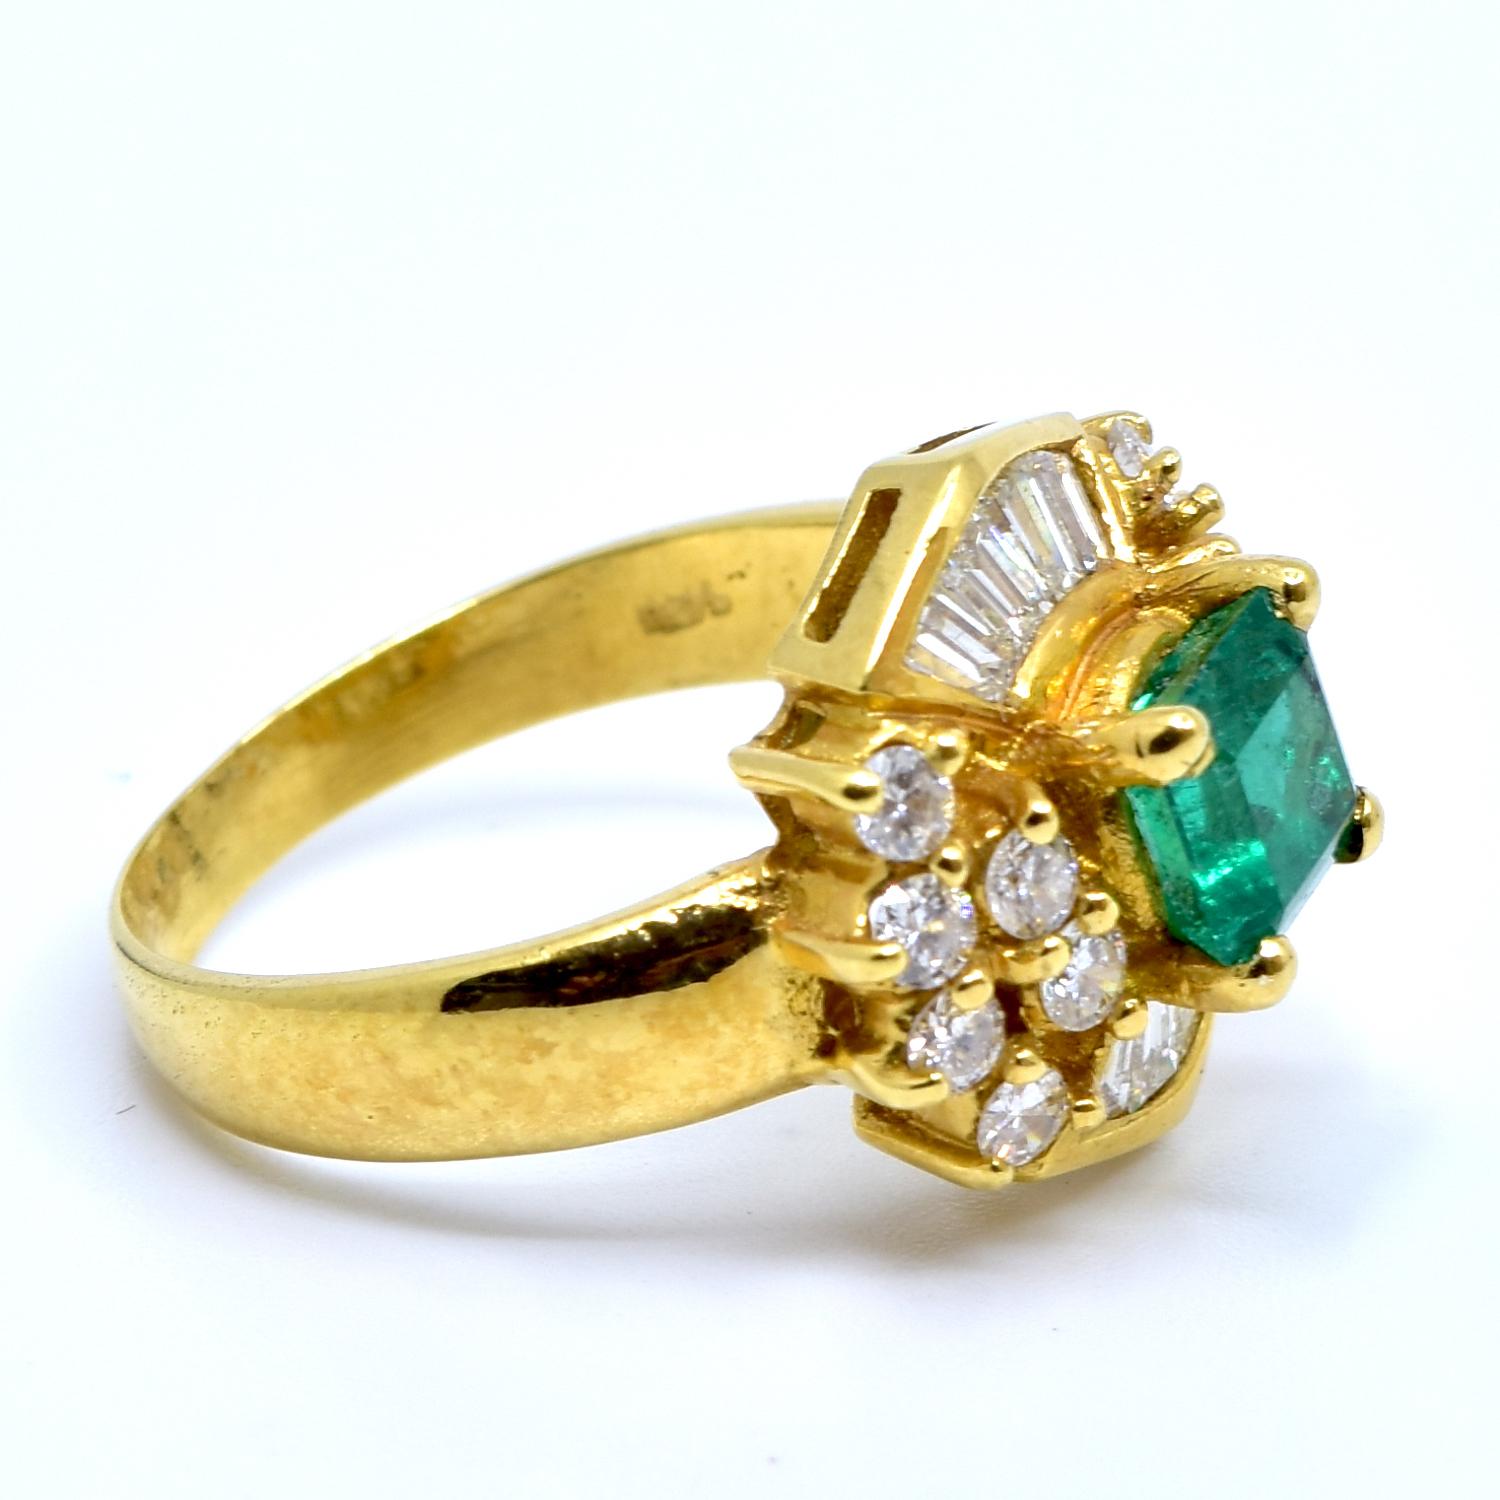 Art Deco Princess Cut Emerald and Diamond Ring in 18 Karat Yellow Gold